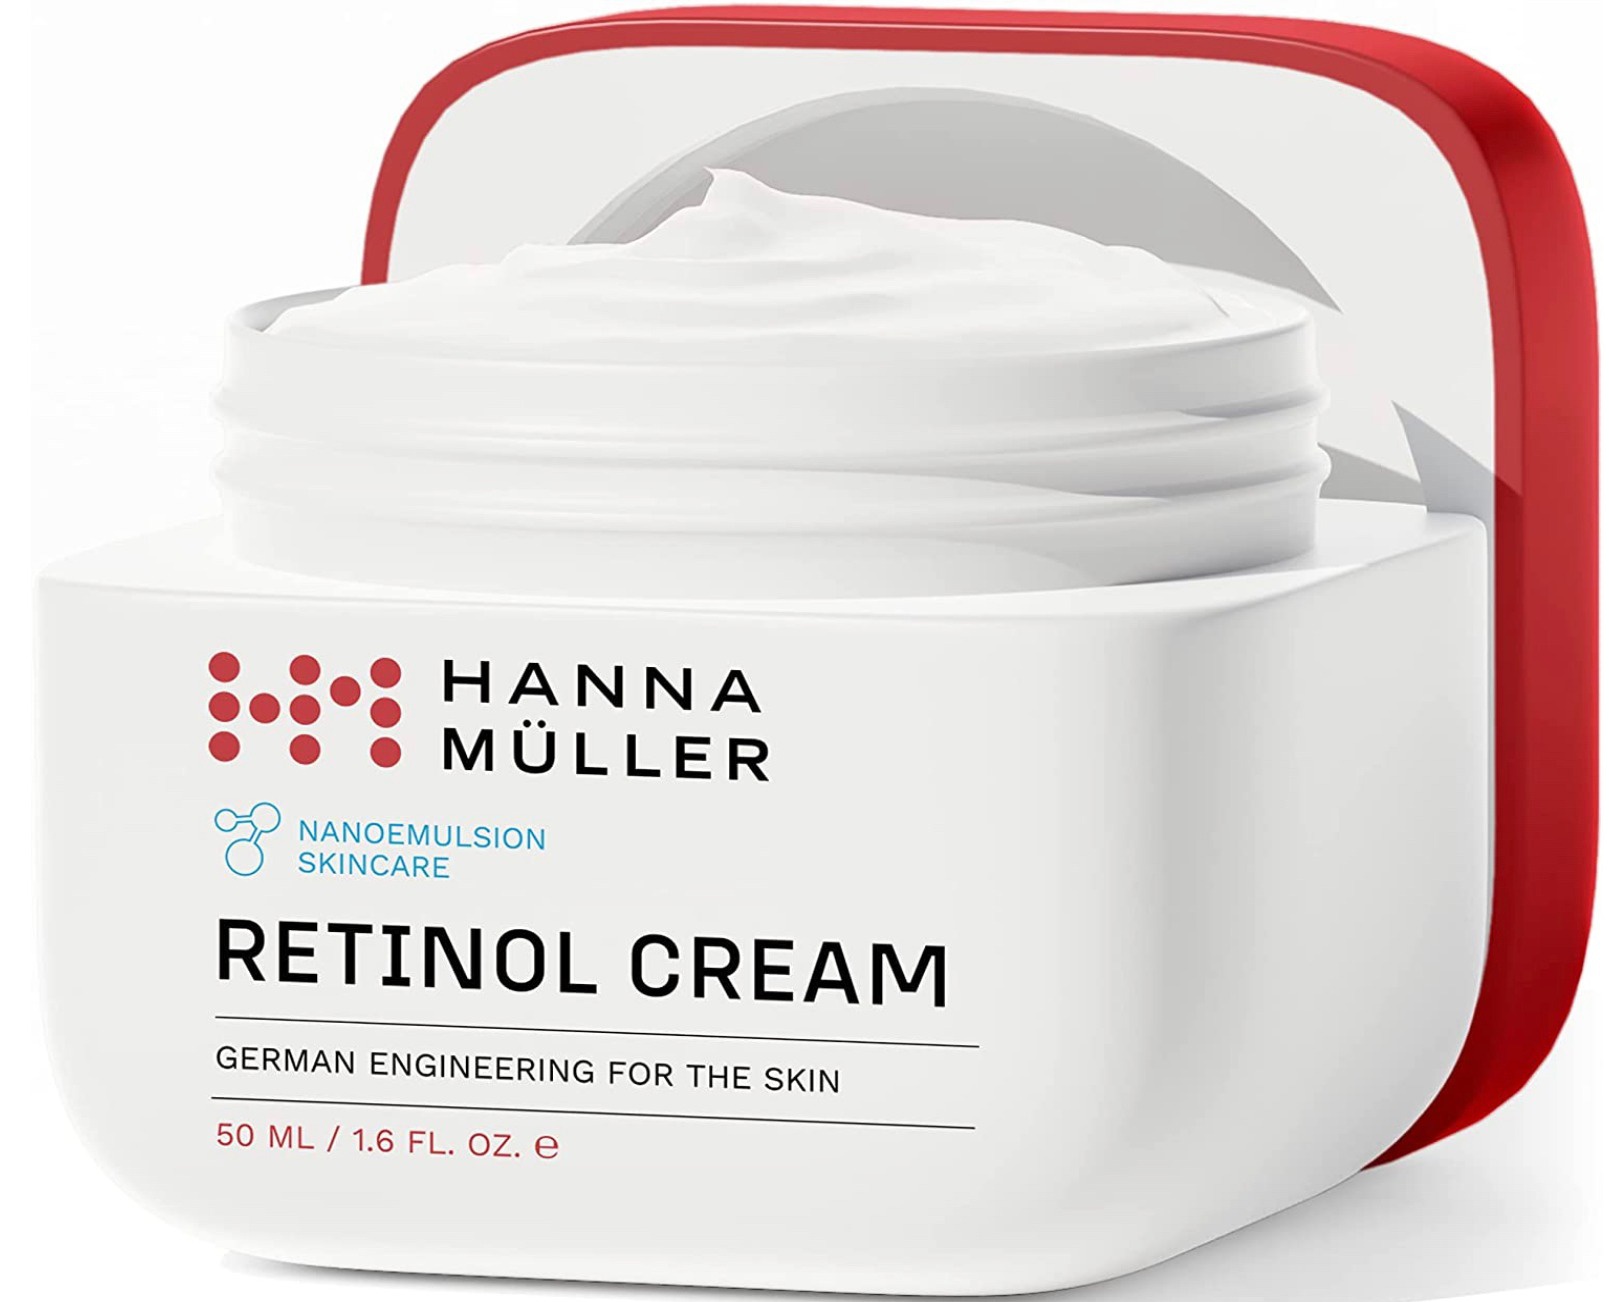 Hanna Muller Retinol Cream